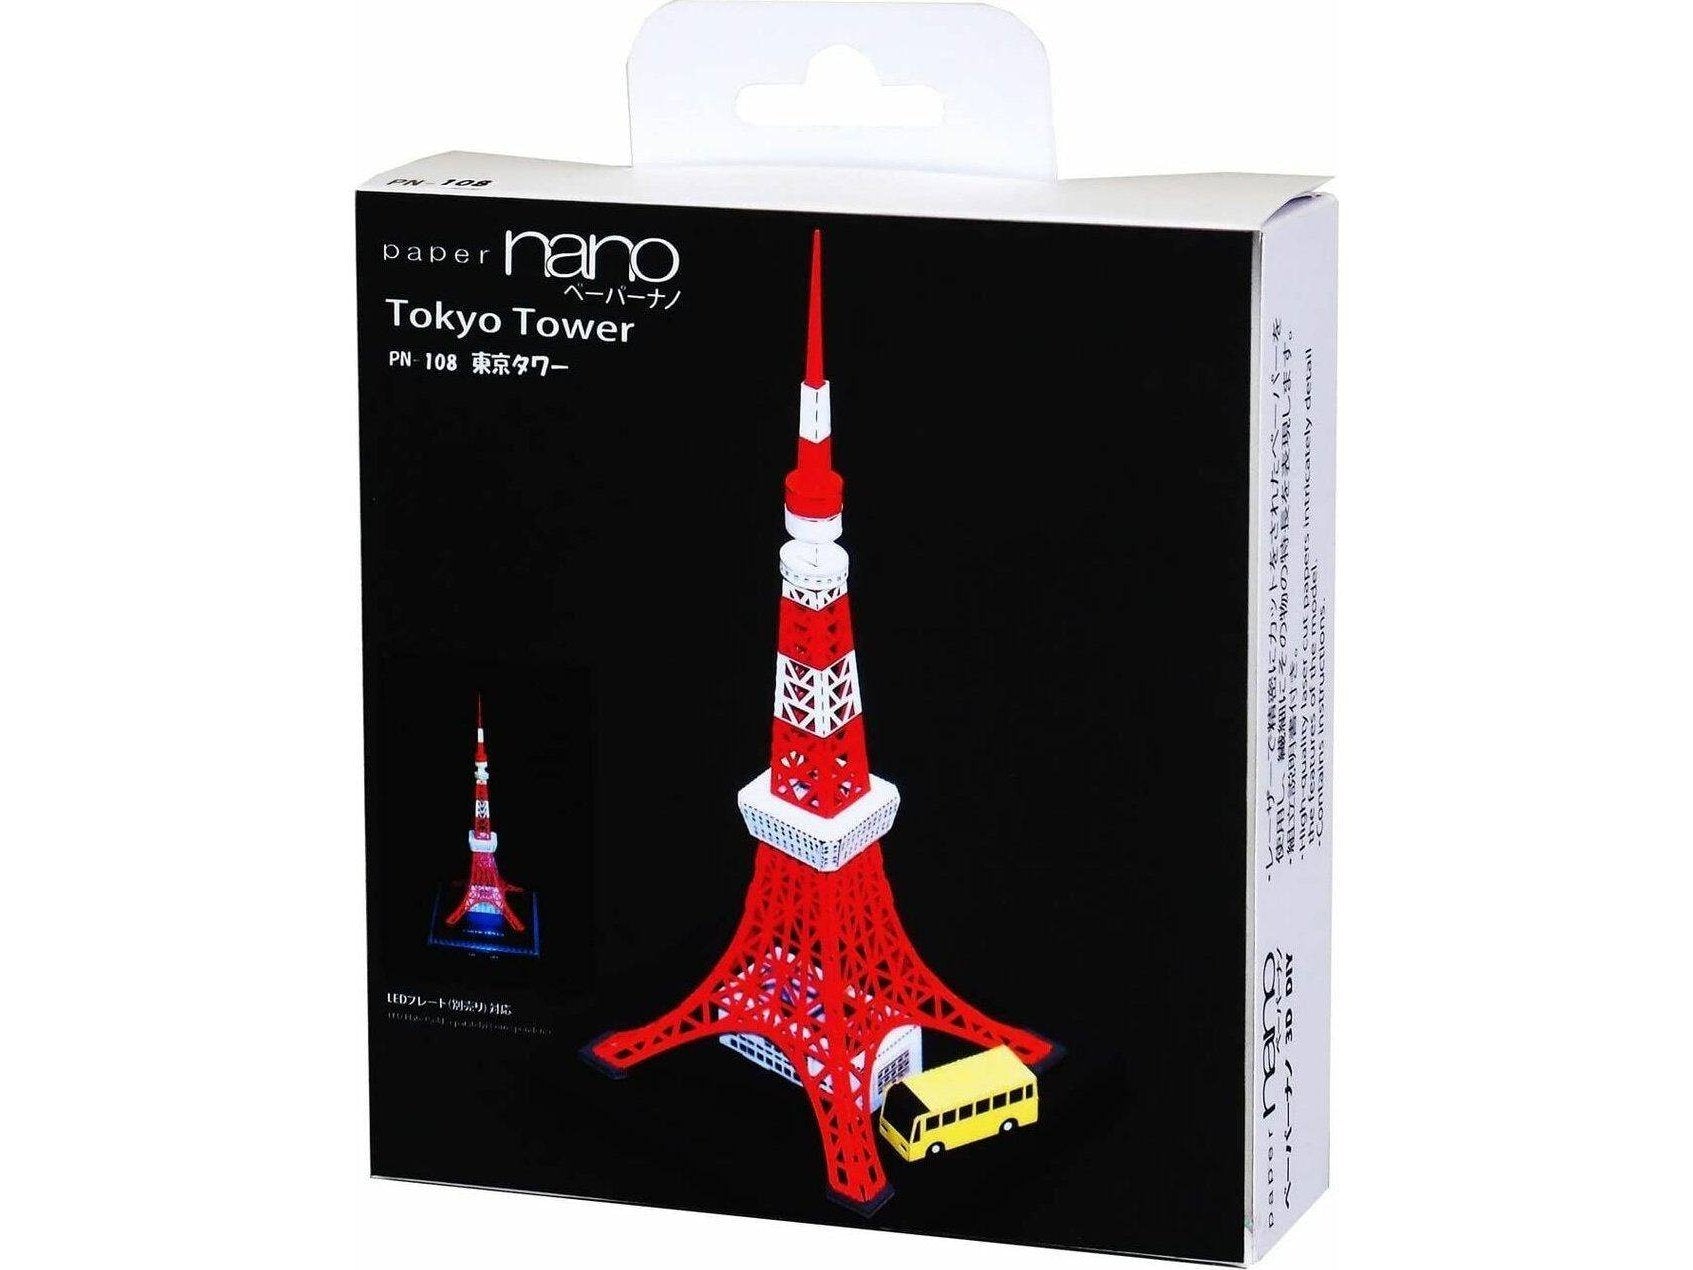 Papernano Tokyo Tower